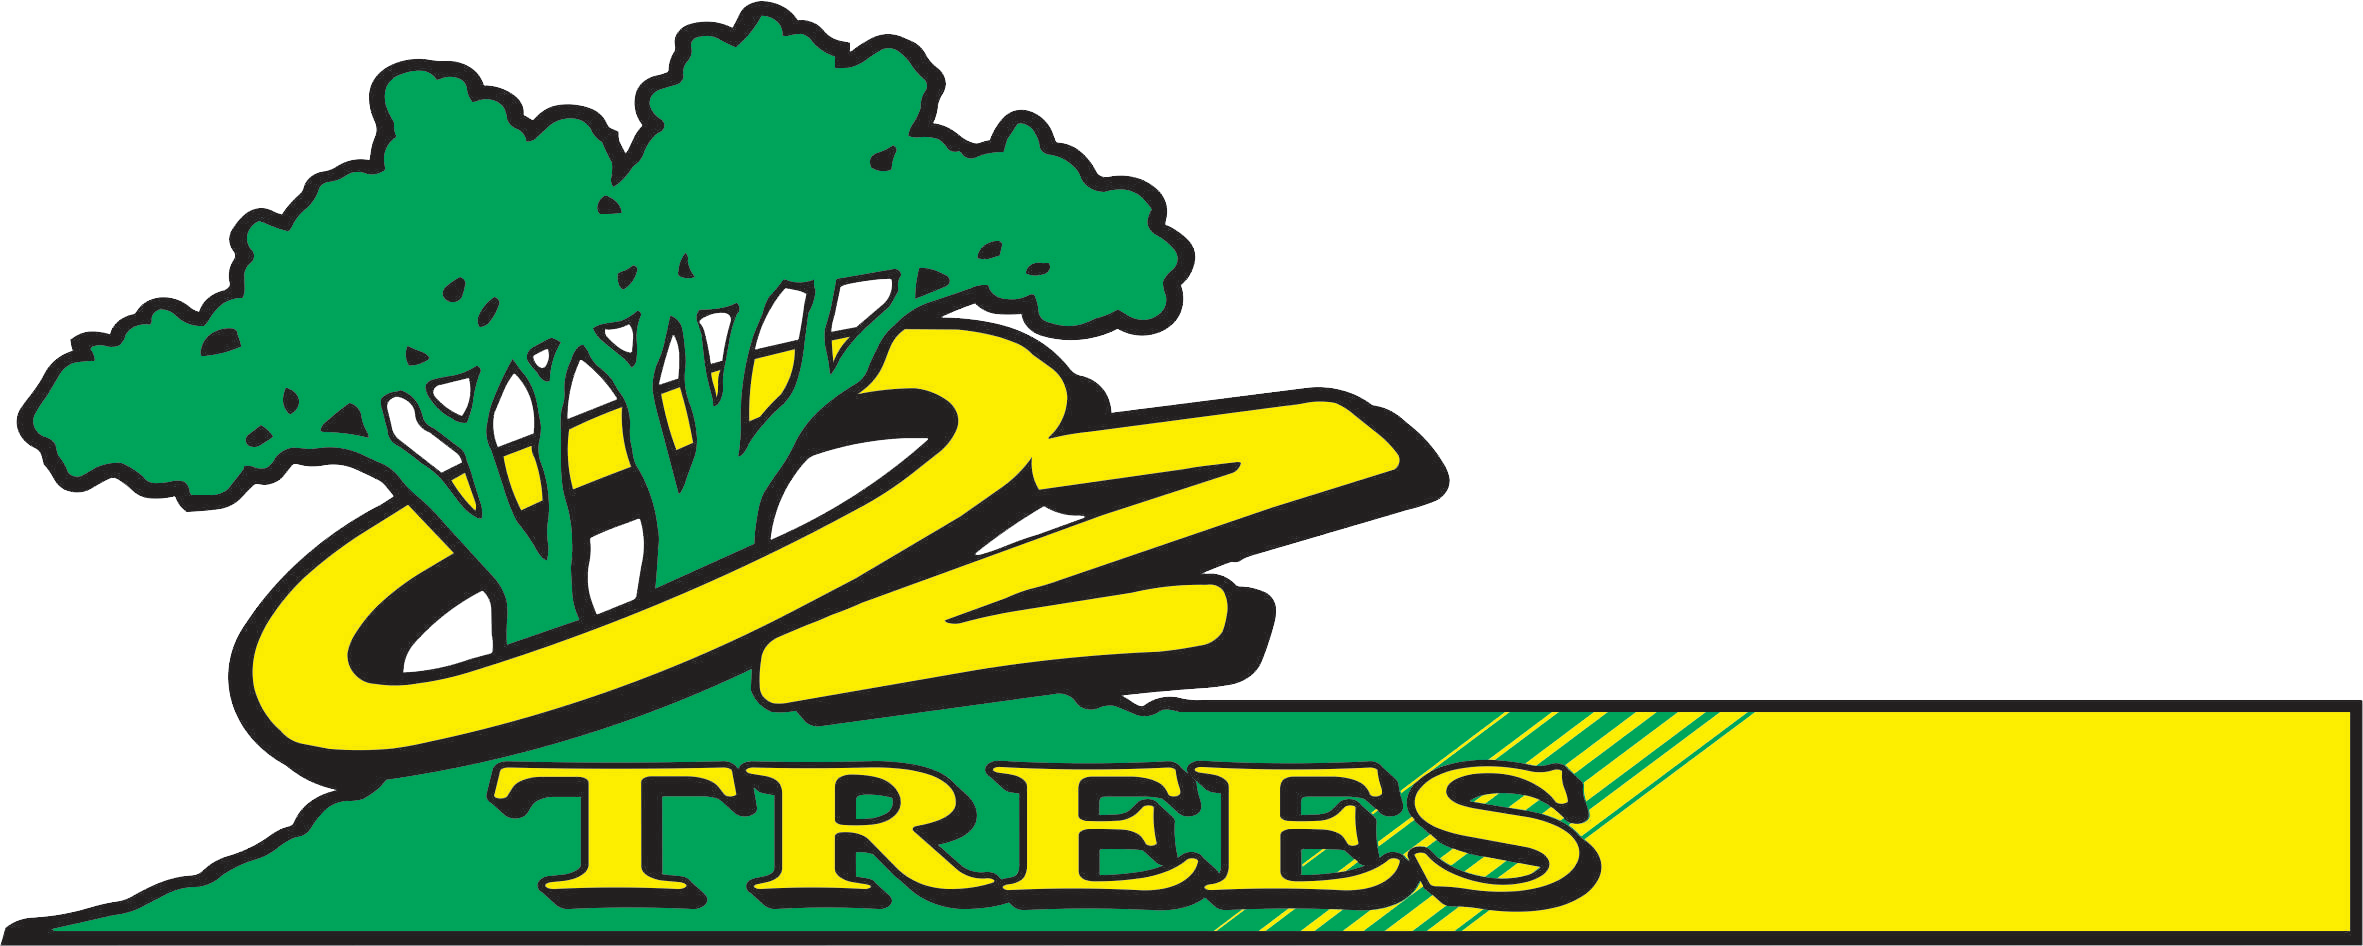 Oz Trees